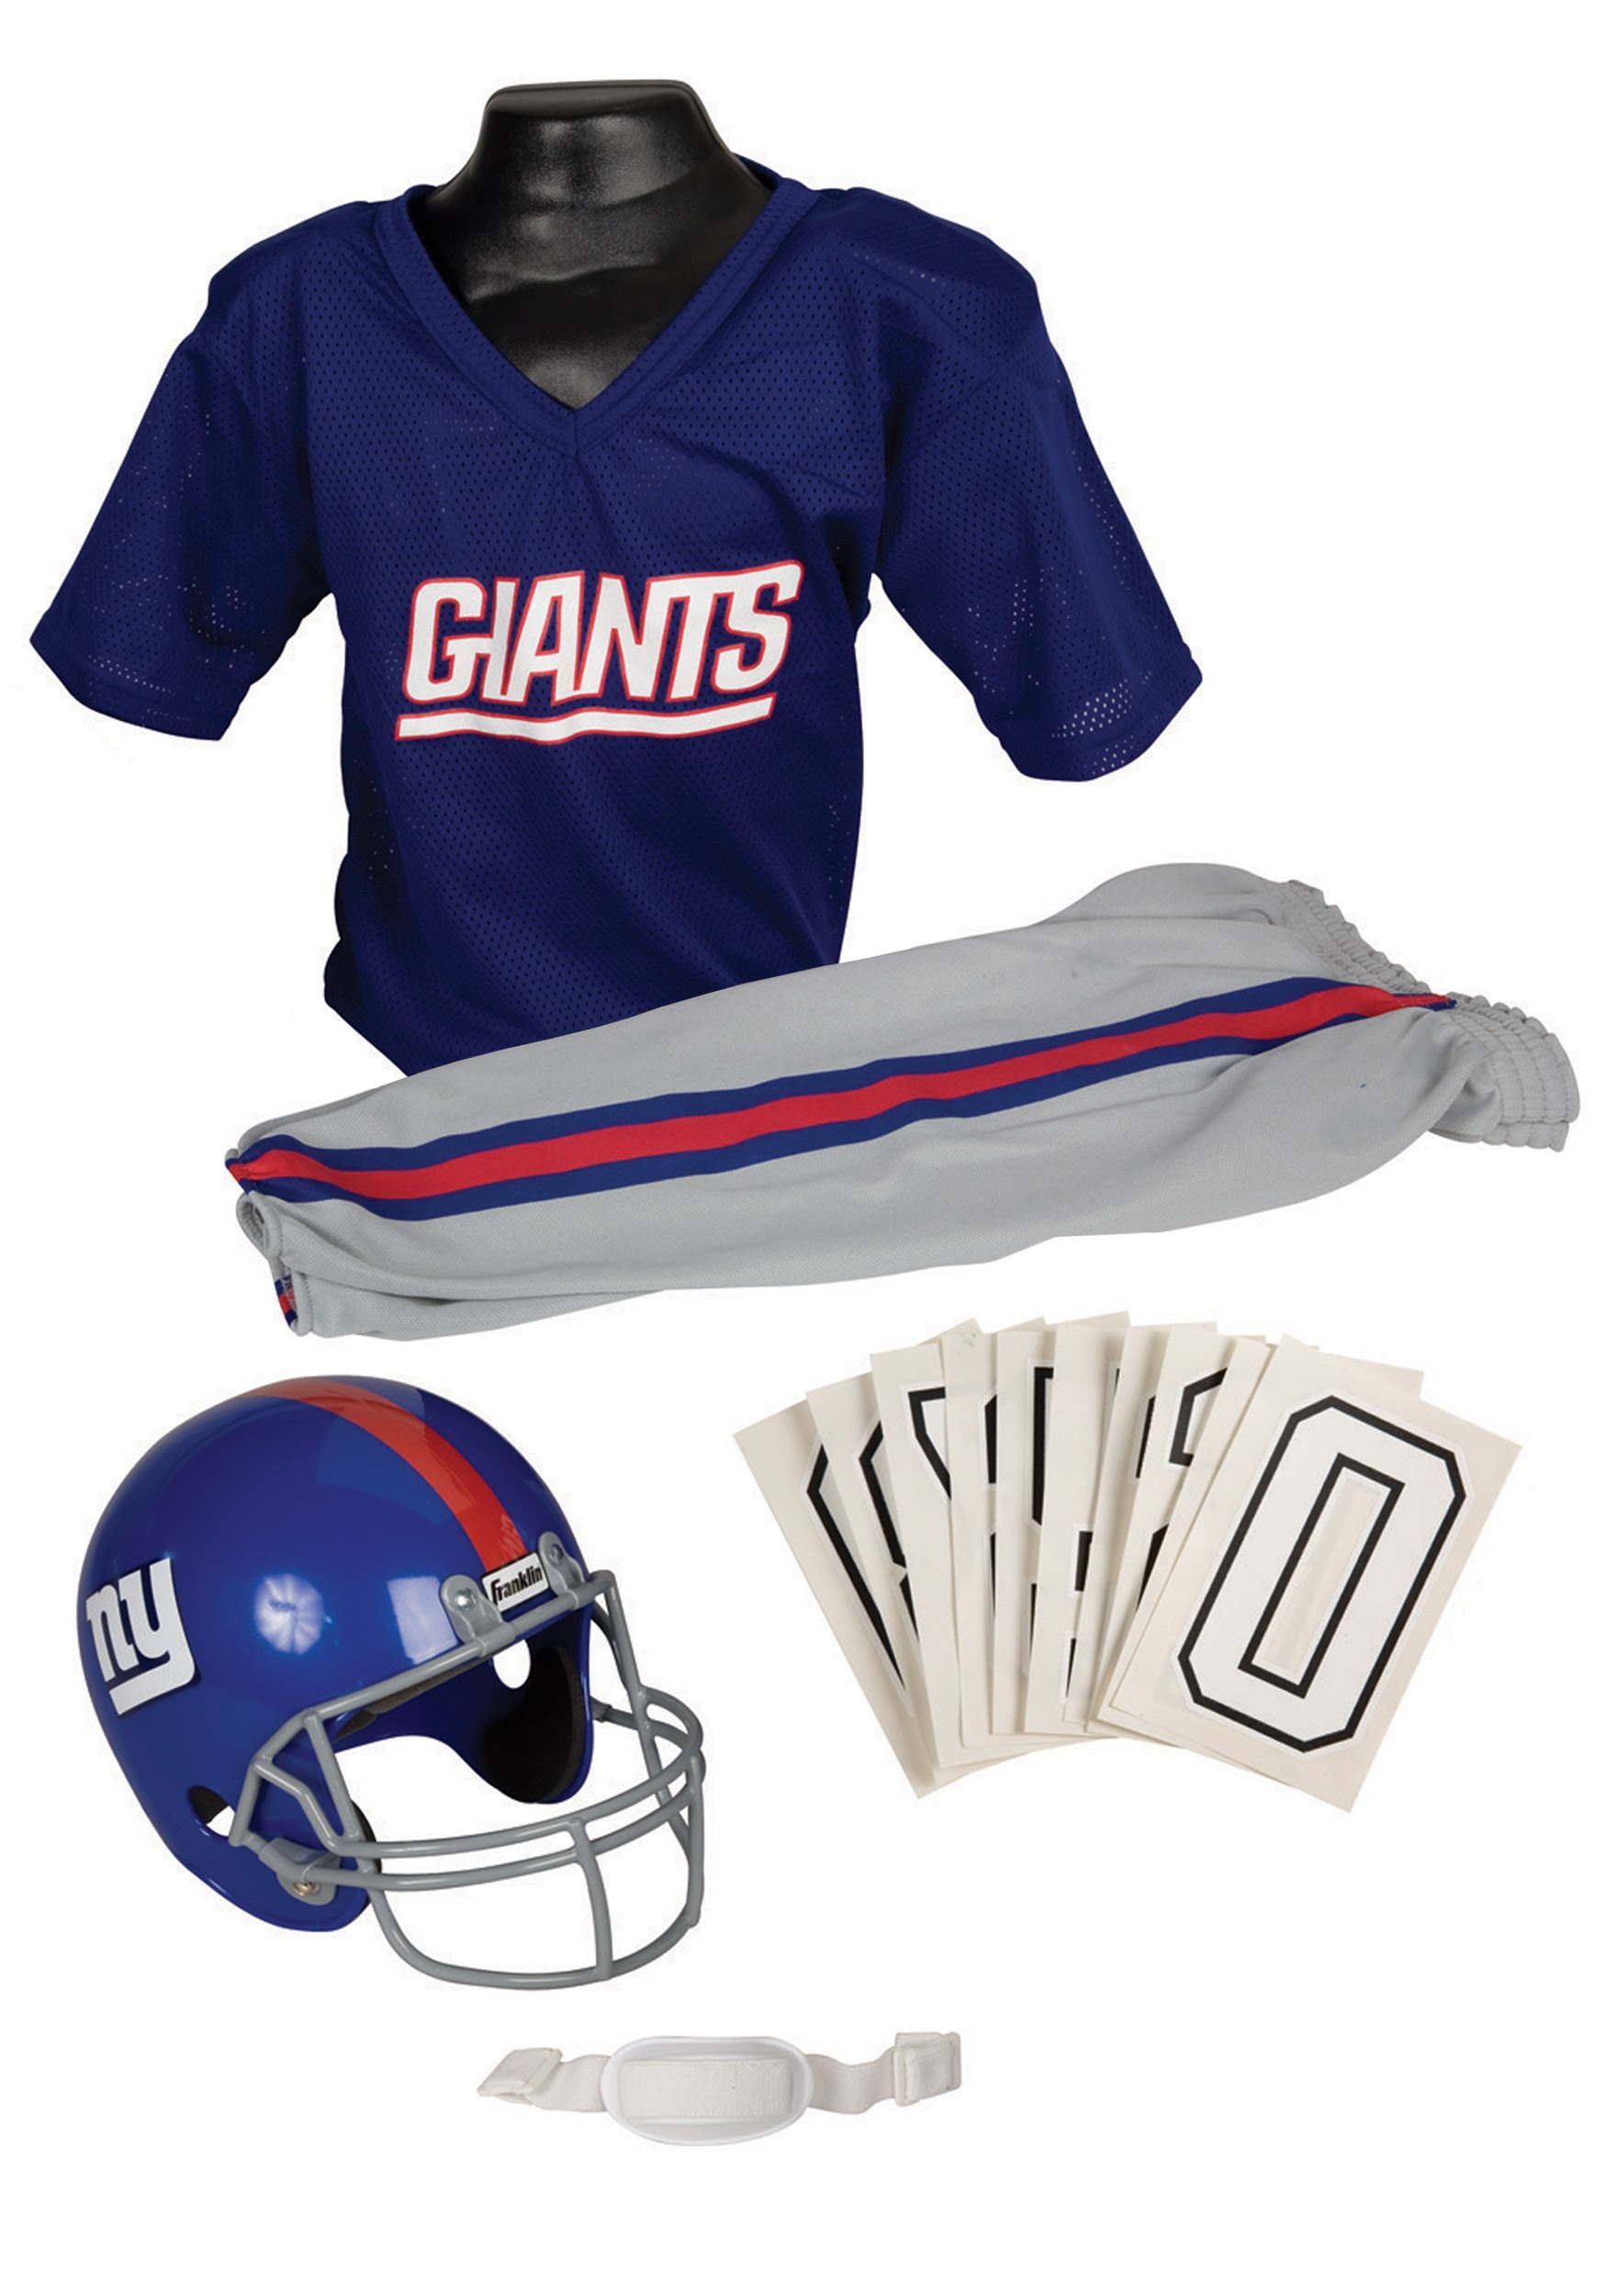 Kids NFL Giants Uniform Costume